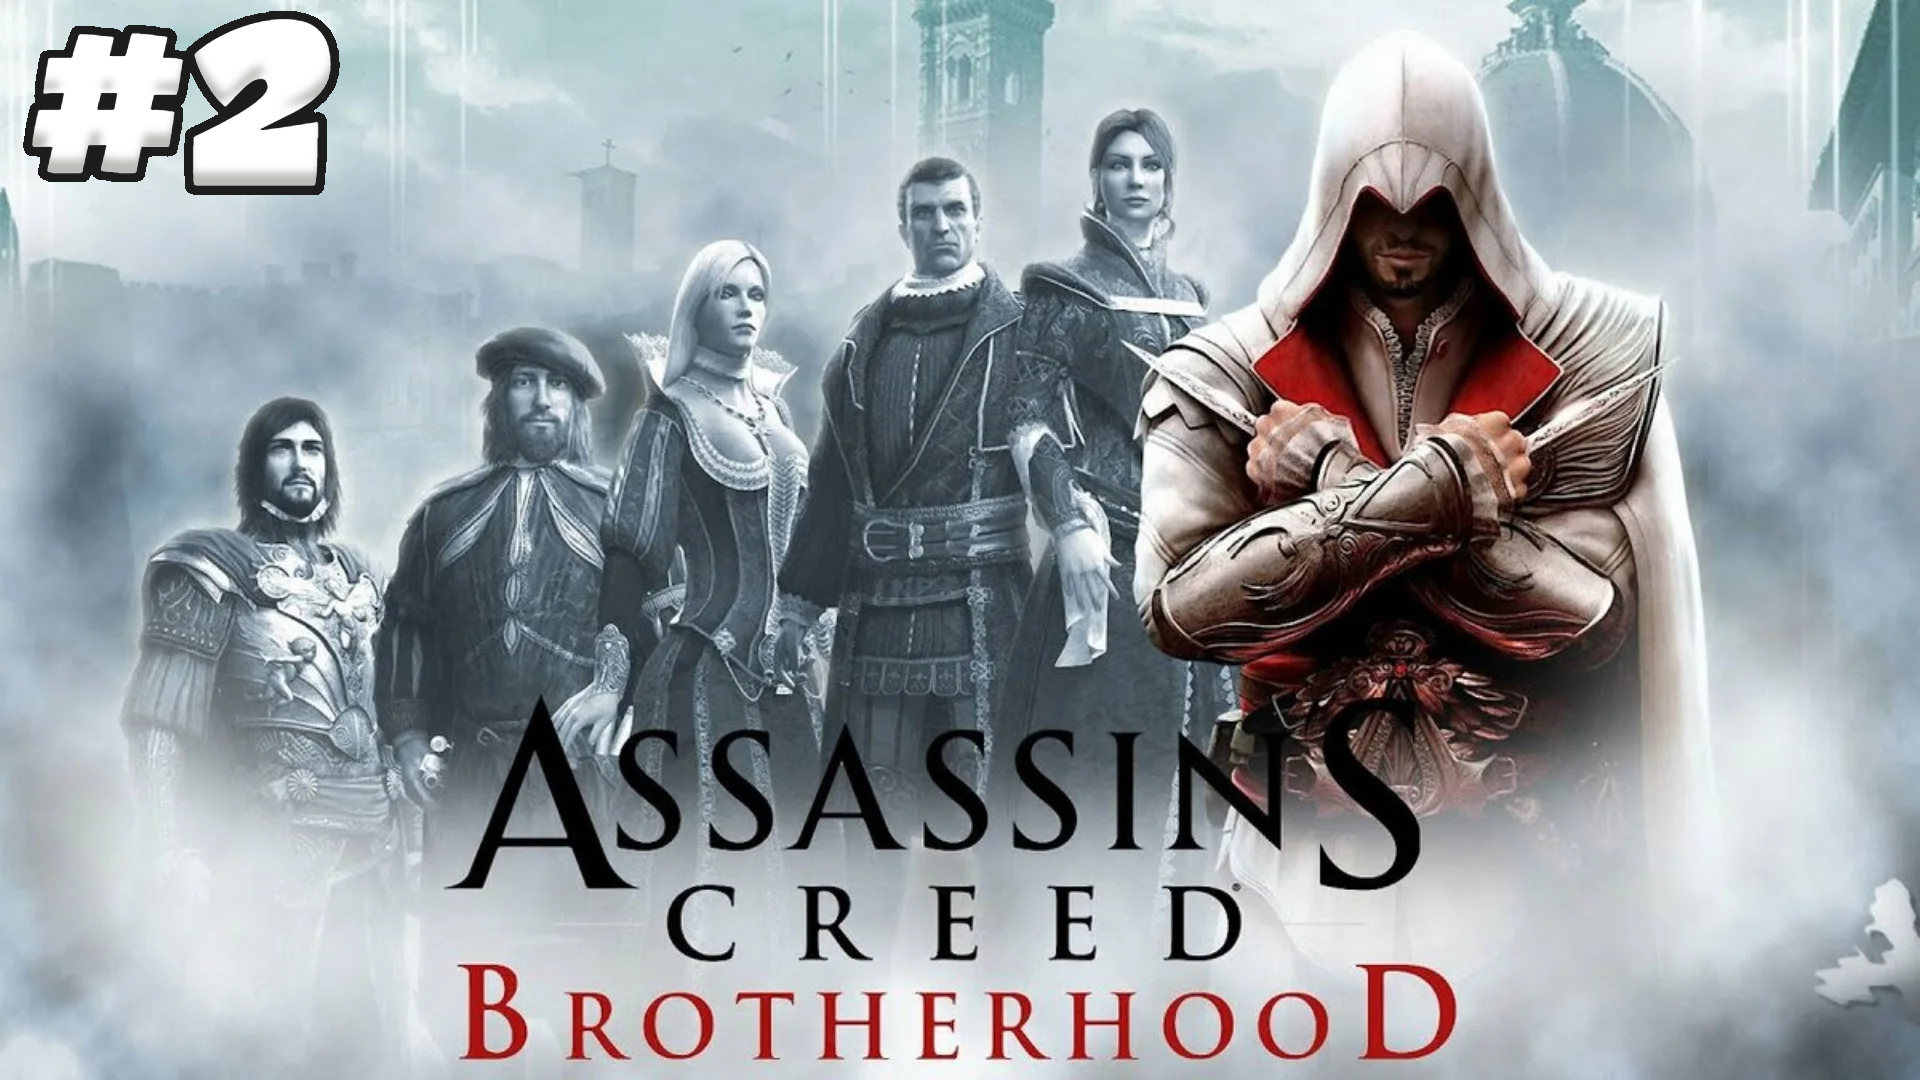 Brotherhood на русском. Assassin's Creed. Братство. Ассасин Крид 2 братство крови обложка. Братство крови ассасин 3. Assassin's Creed 2 Brotherhood poster.